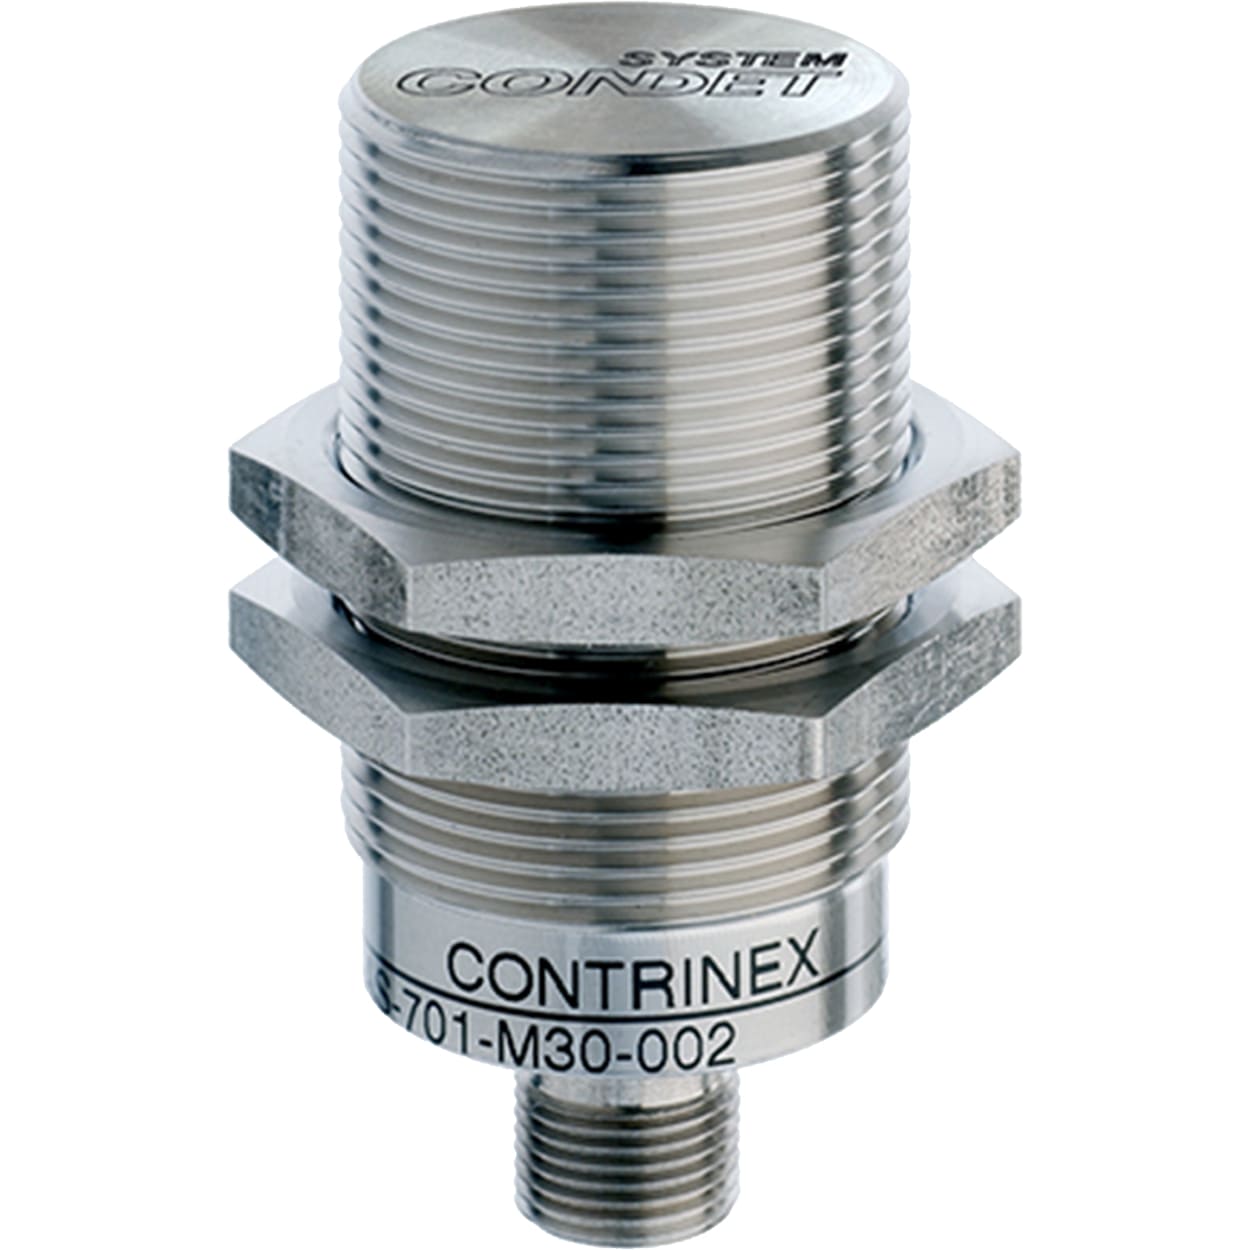 CONTRINEX DW-AS-703-M30-002